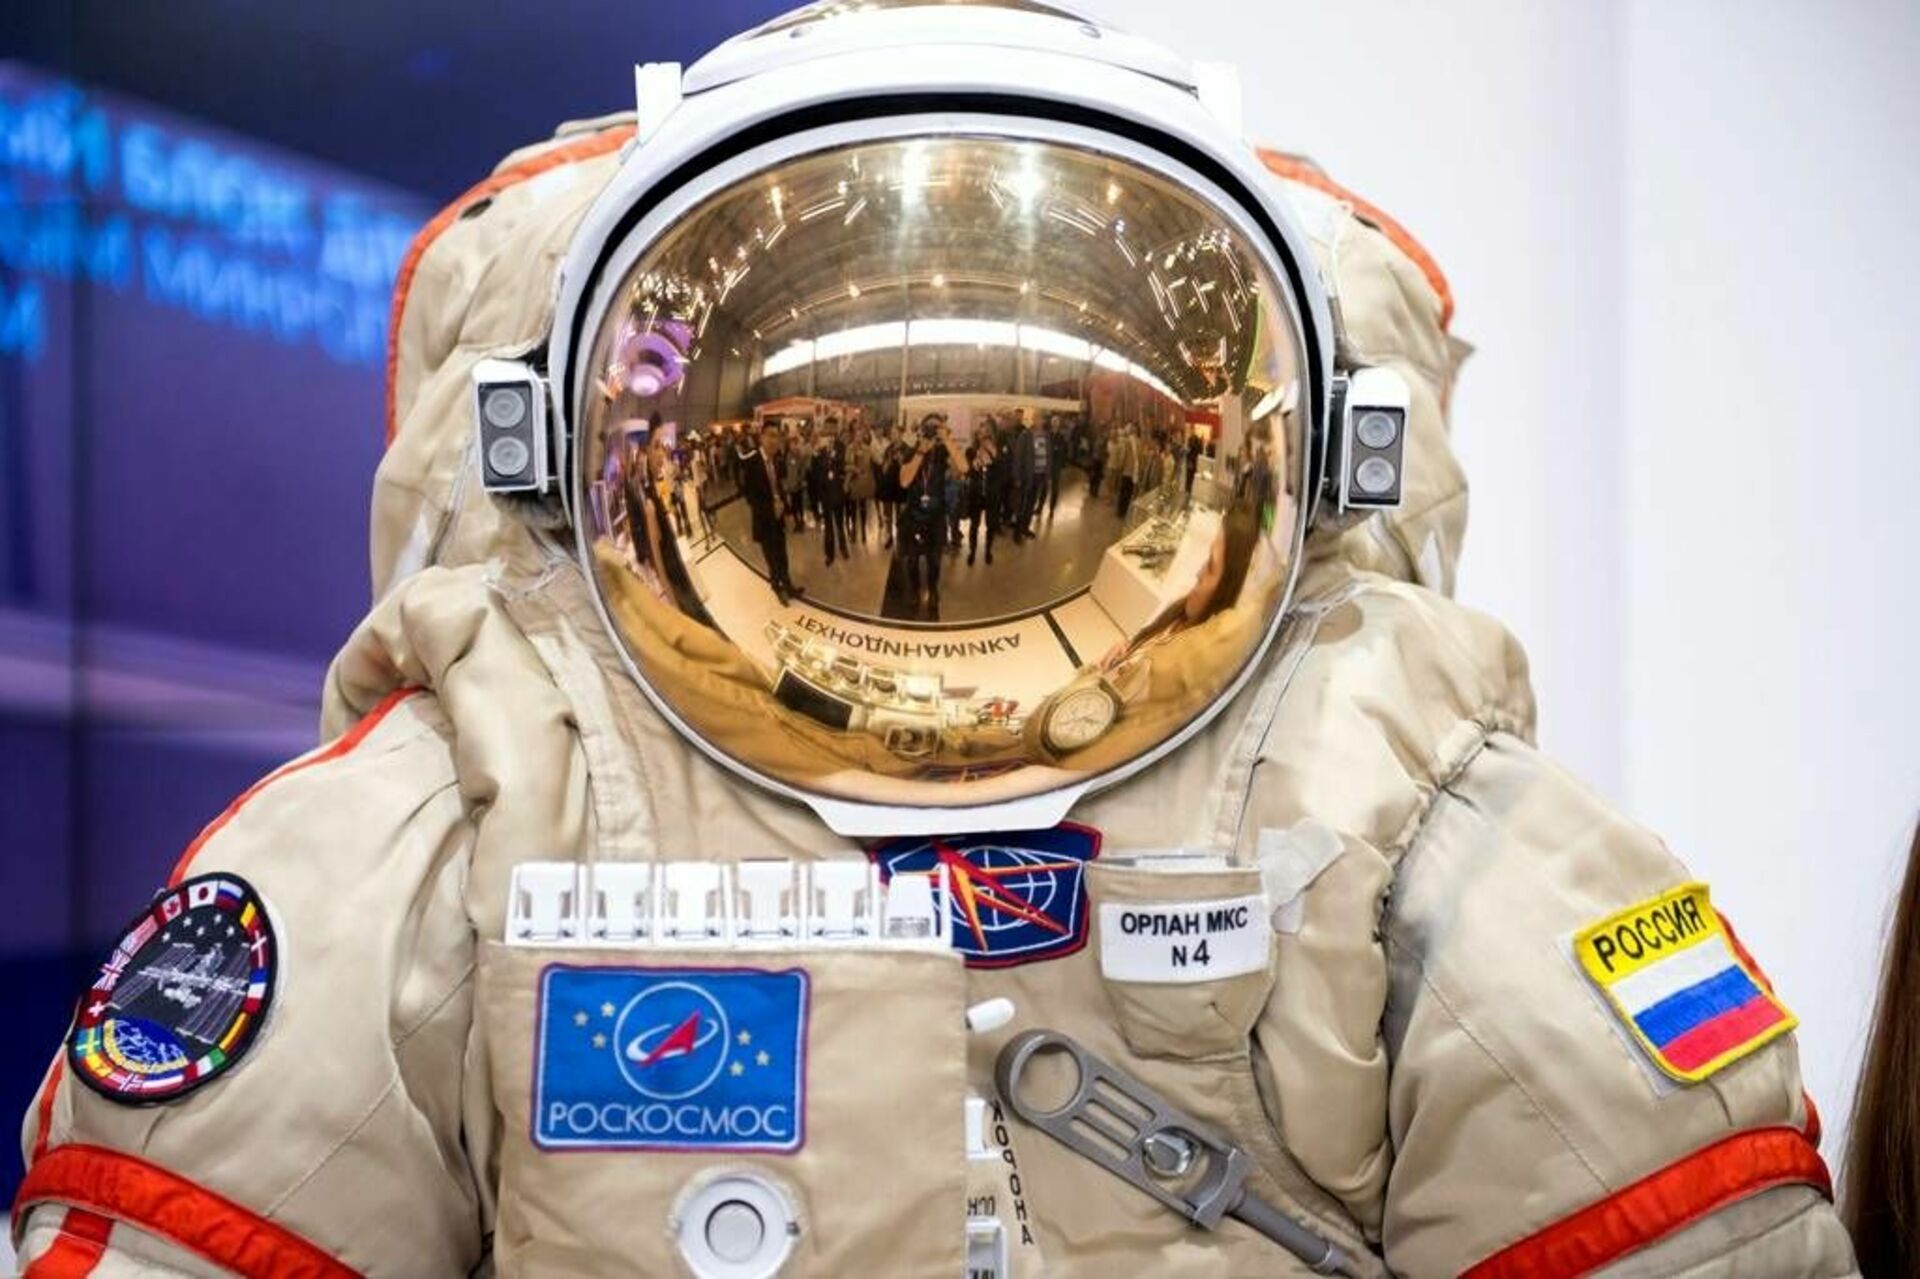 Вес скафандра. Скафандр Космонавта Орлан МКС. Шлем Орлан МКС. Орлан костюм Космонавта. Скафандр для выхода в открытый космос Орлан.